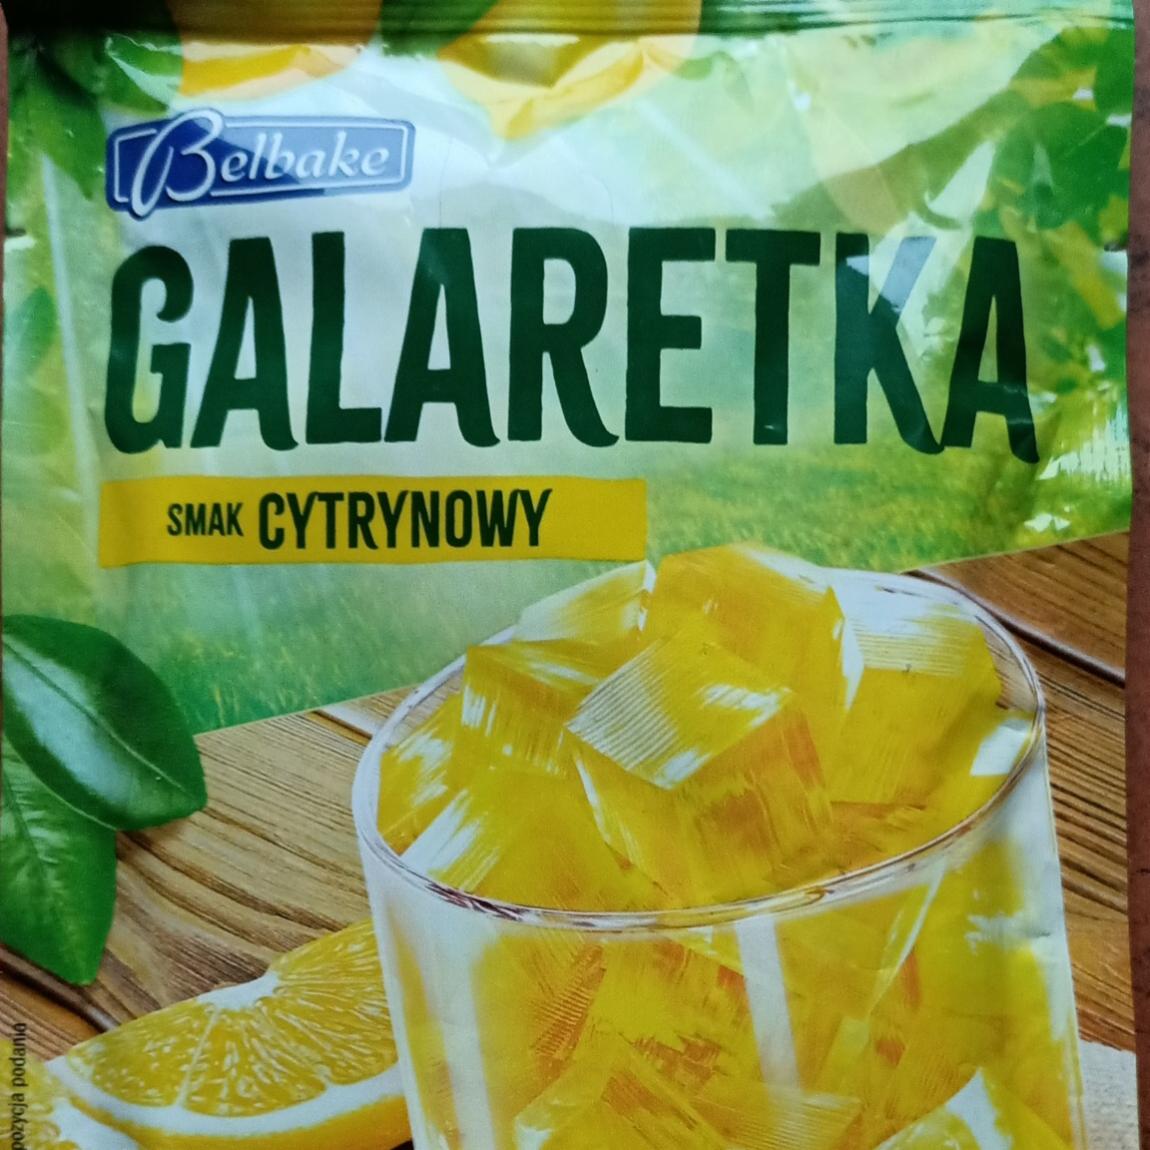 Фото - Galaretka smak cytrynowy Belbake